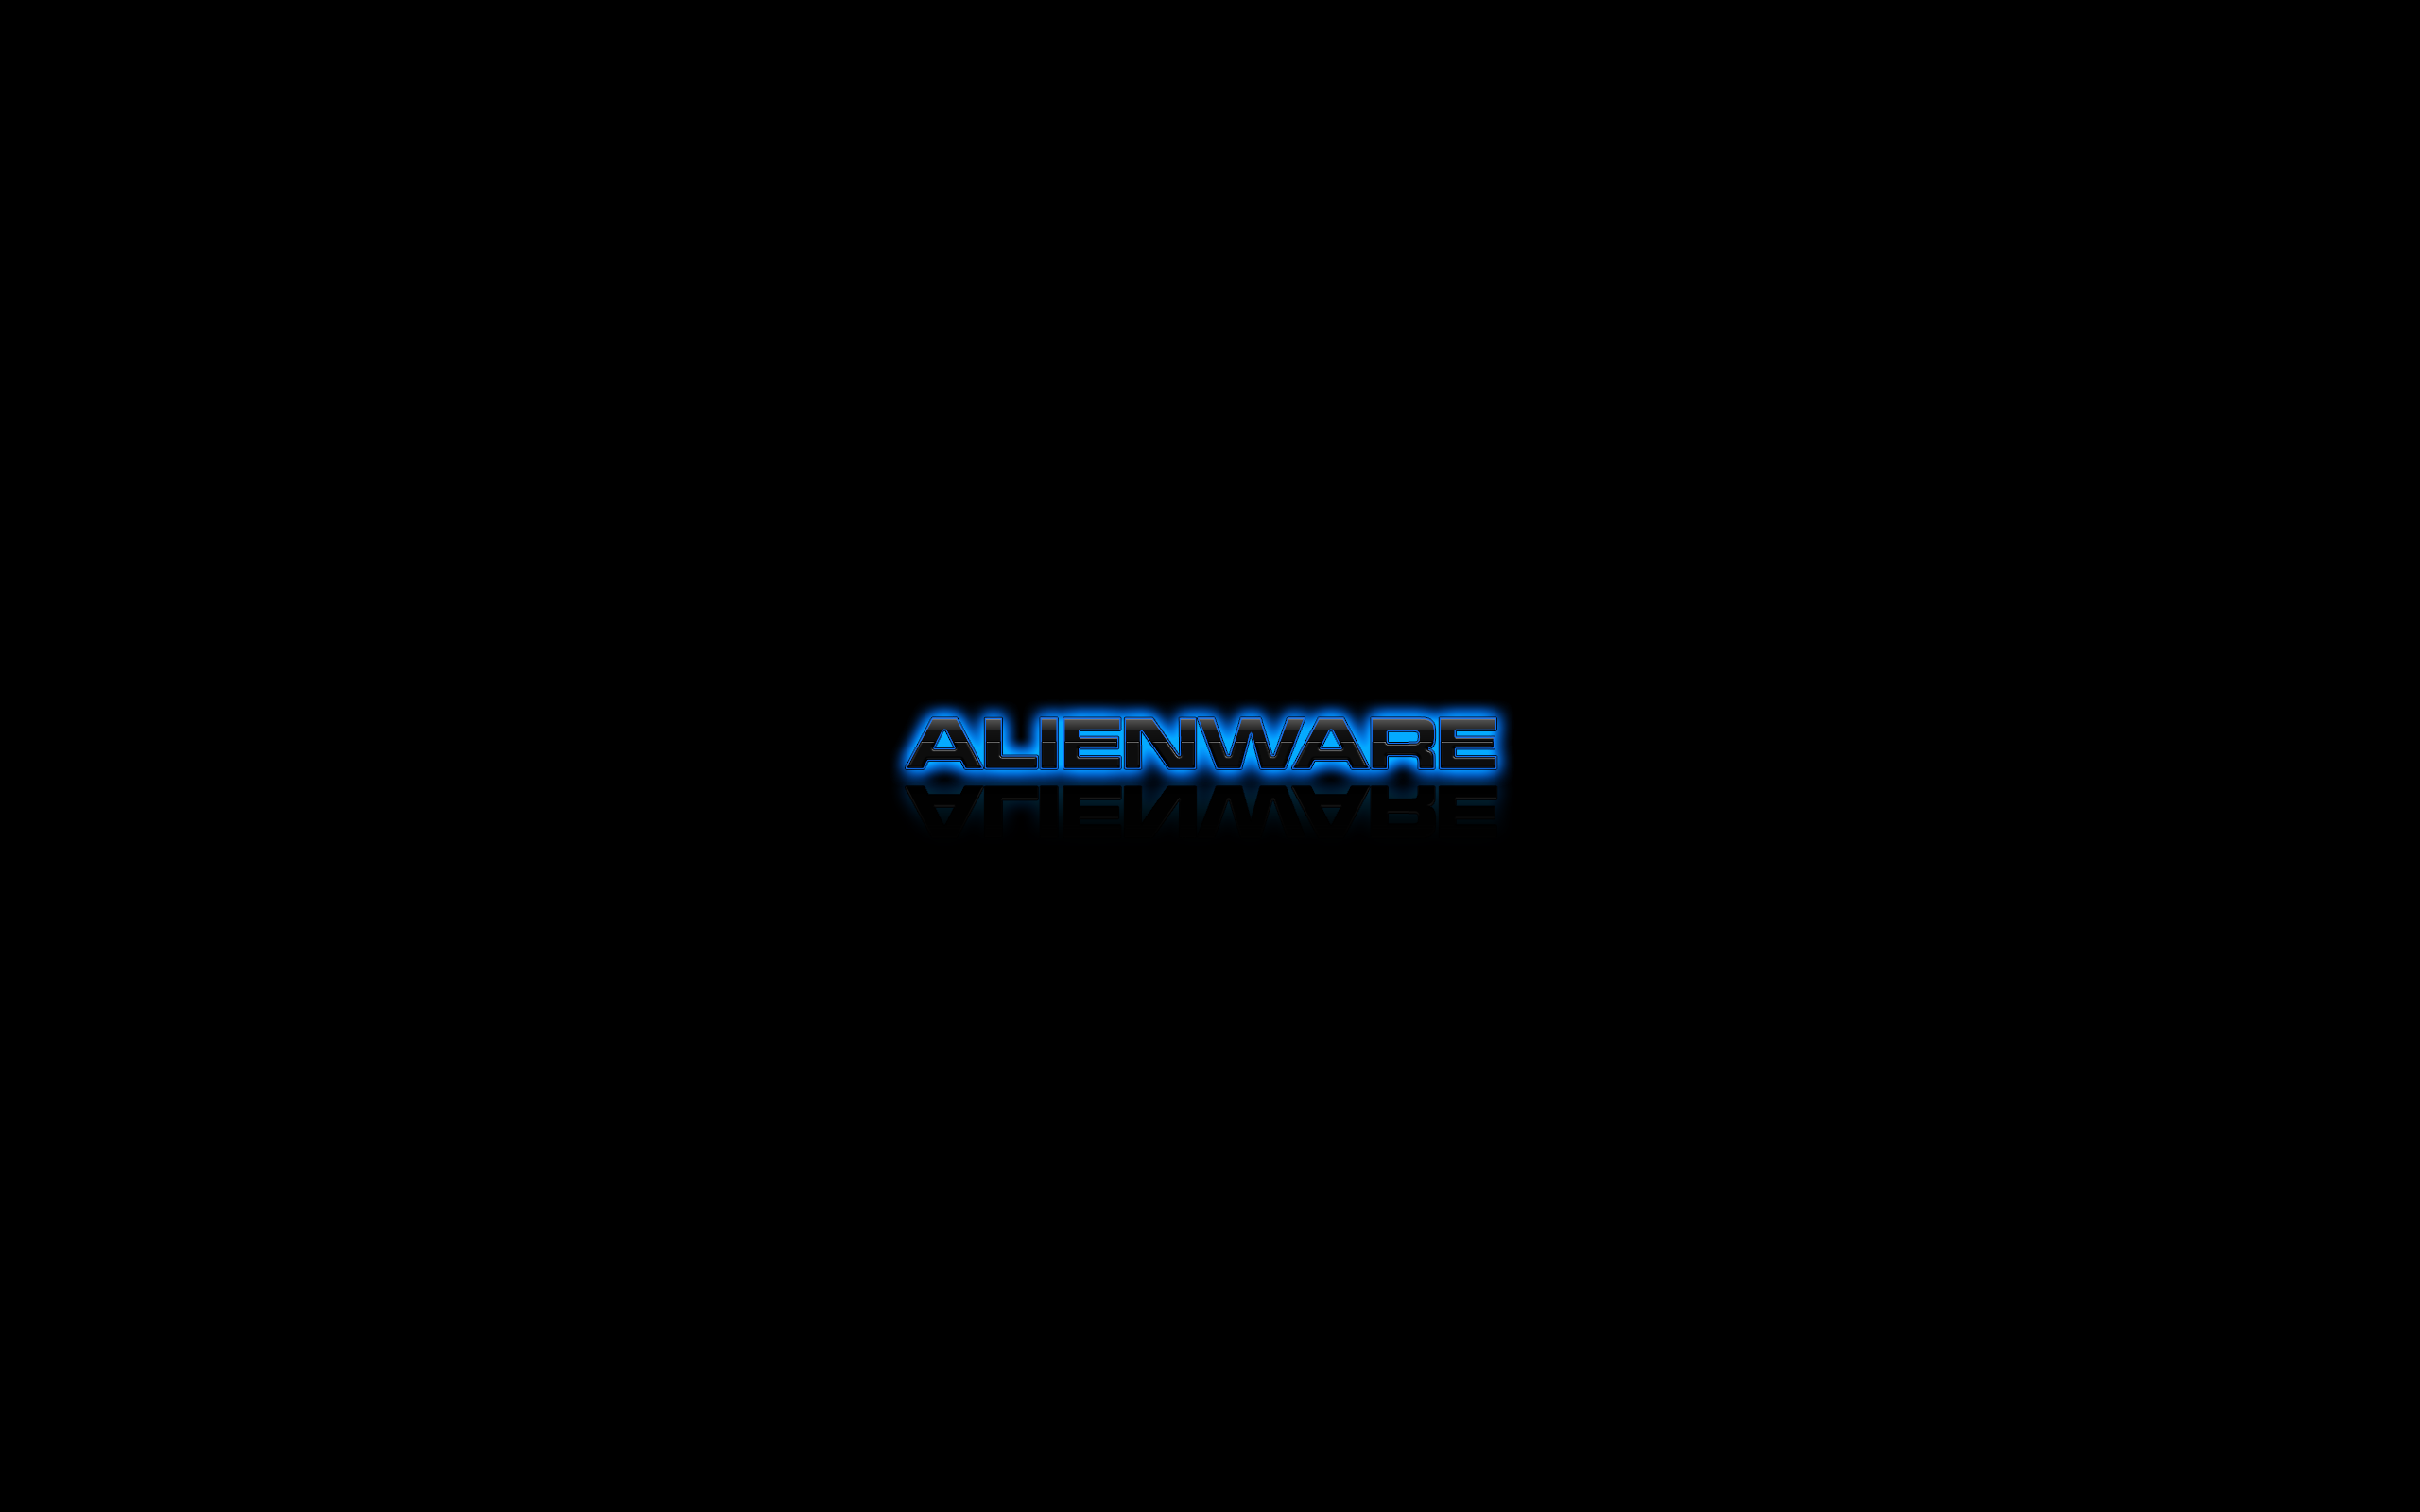 Alienware Logo Wallpaper 41232 25601600 px fond ecran